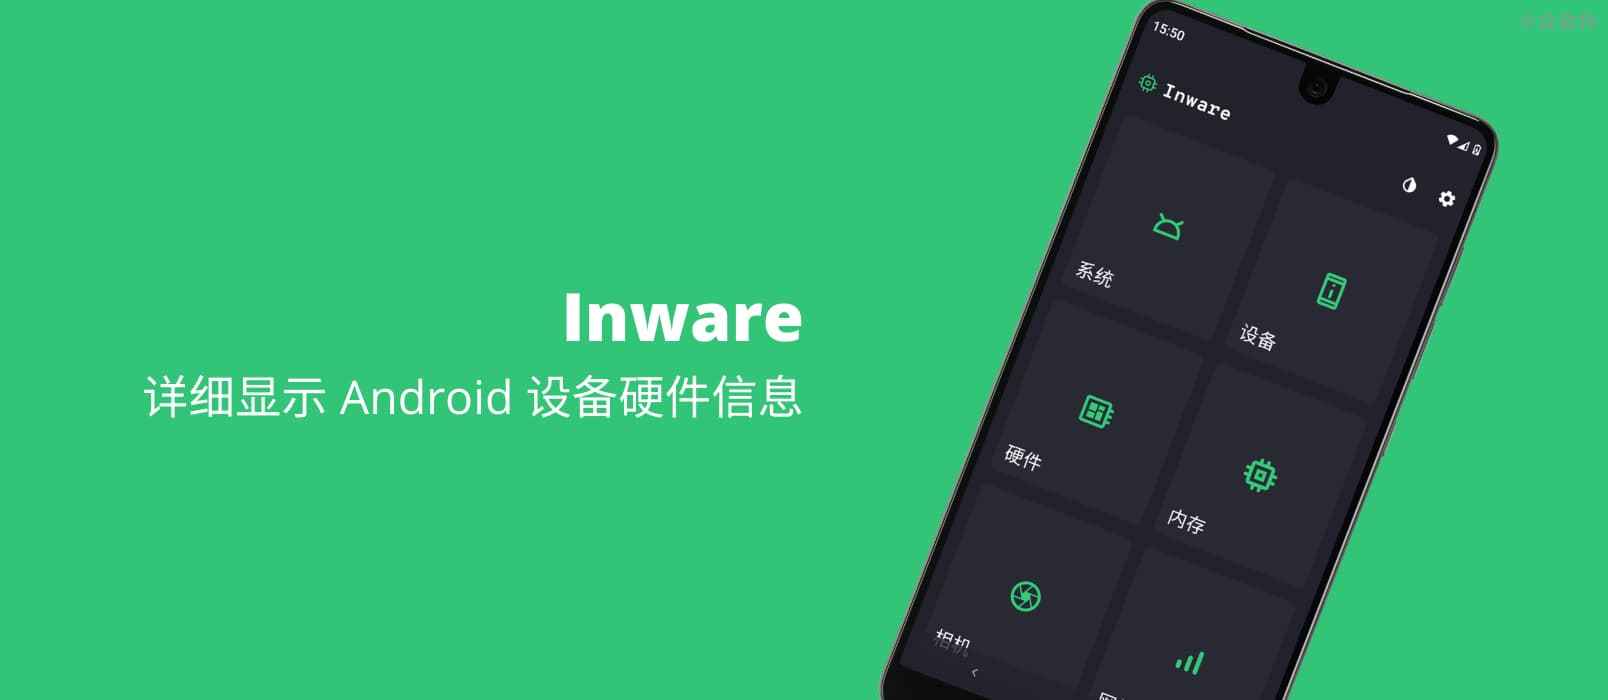 Inware – 详细显示 Android 设备硬件信息